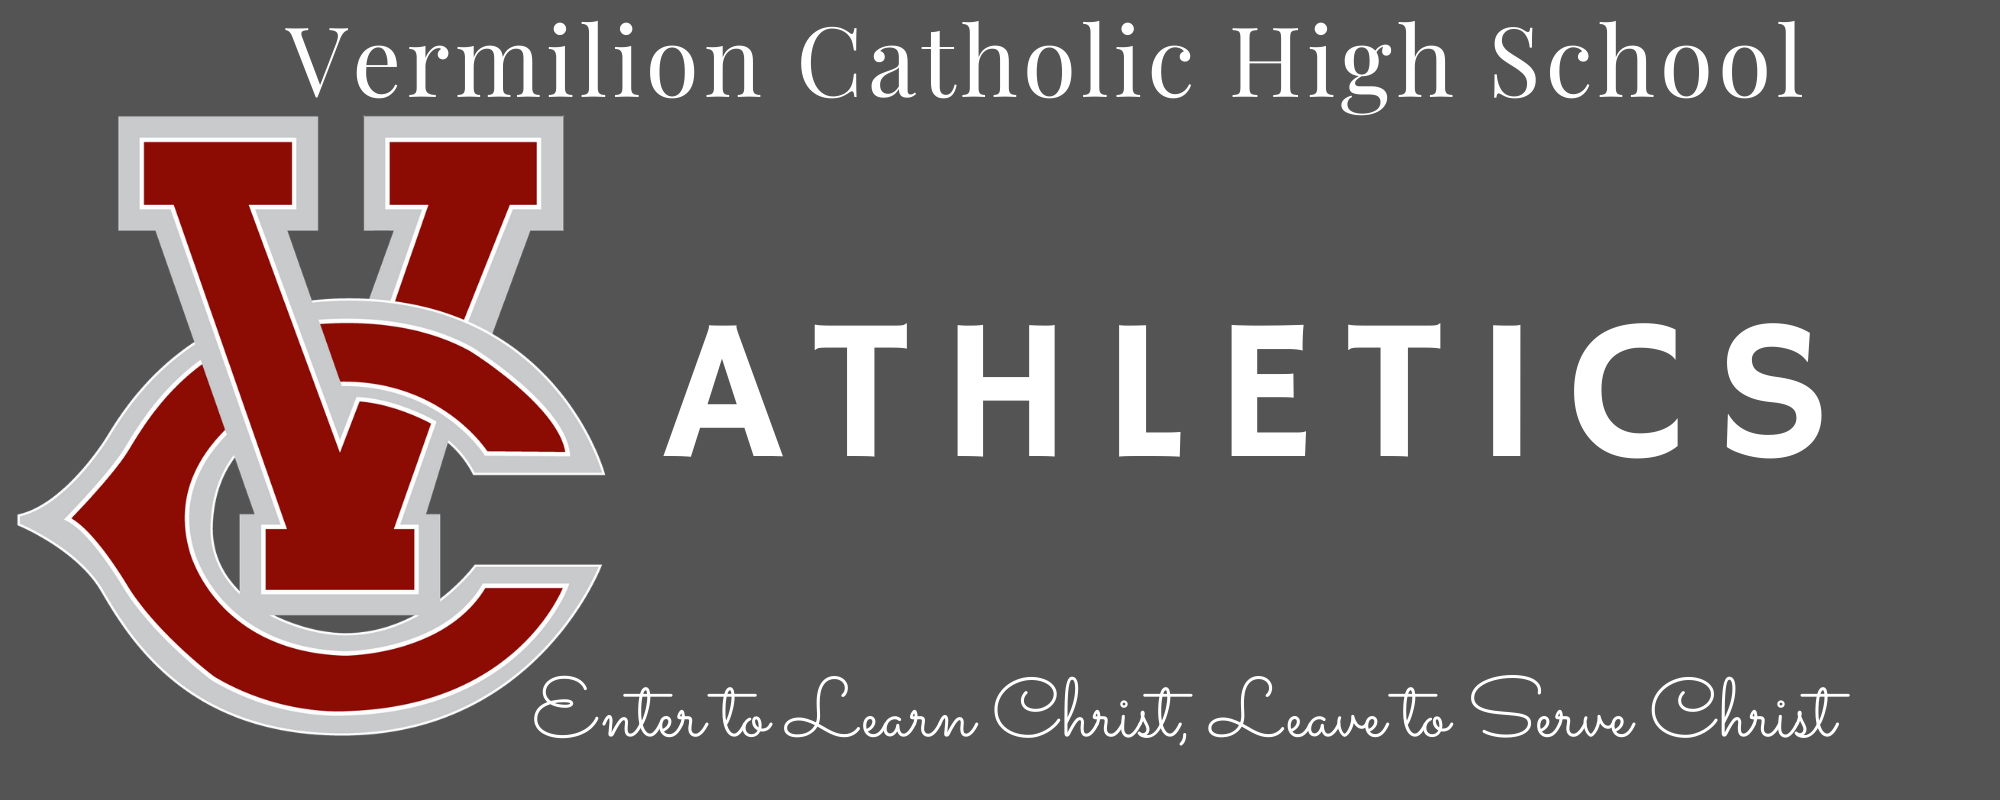 Athletics Vermilion Catholic High School 